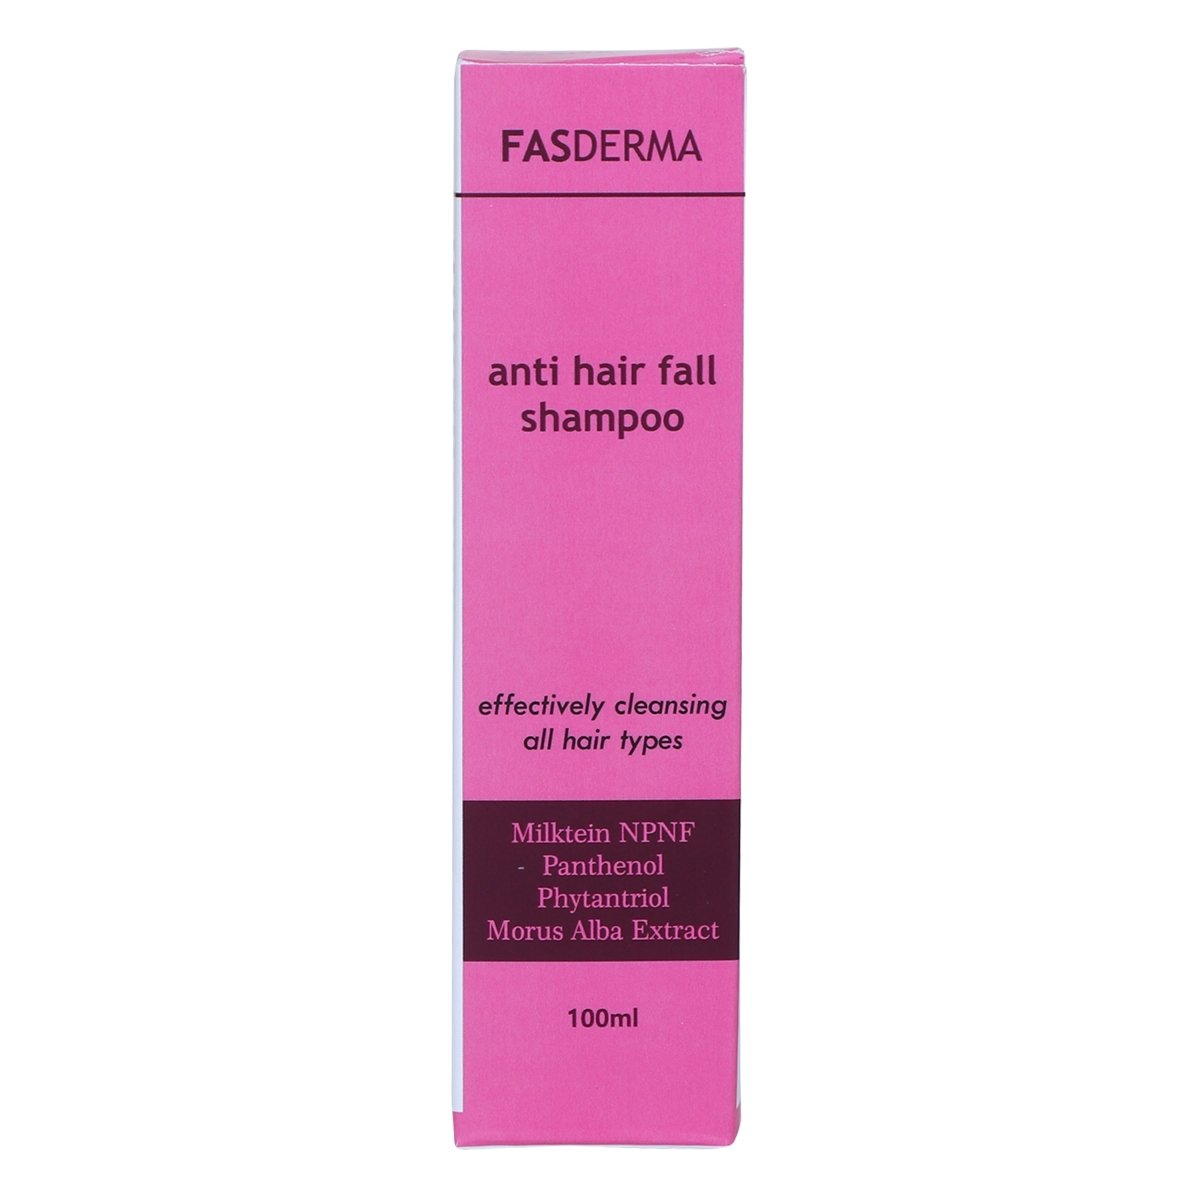 Anti Hair Fall Shampoo - 100ml - Fasderma India